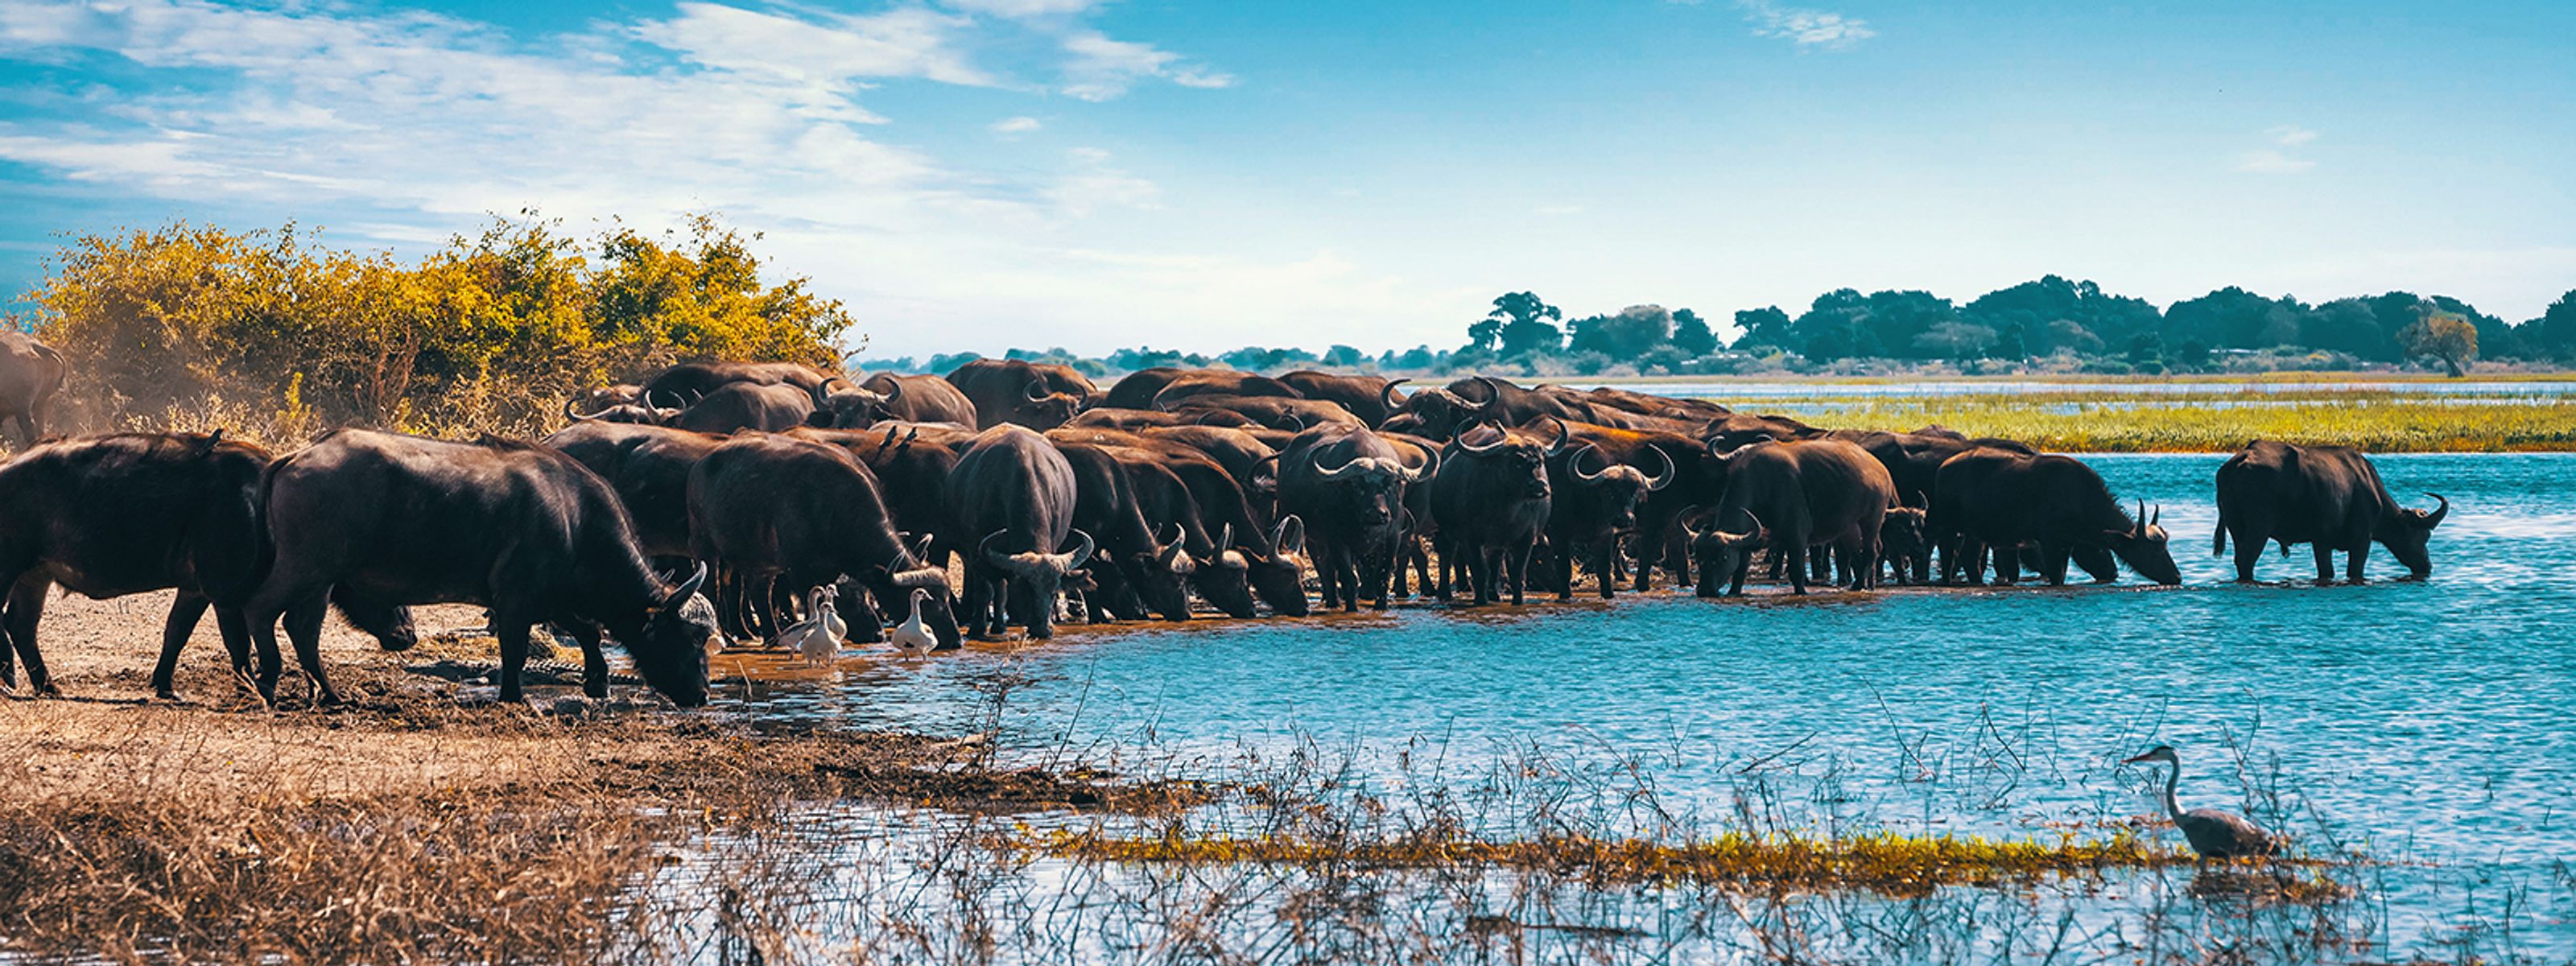 Kaffernbüffel am Chobe-Fluss, Botswana iStock © Artush